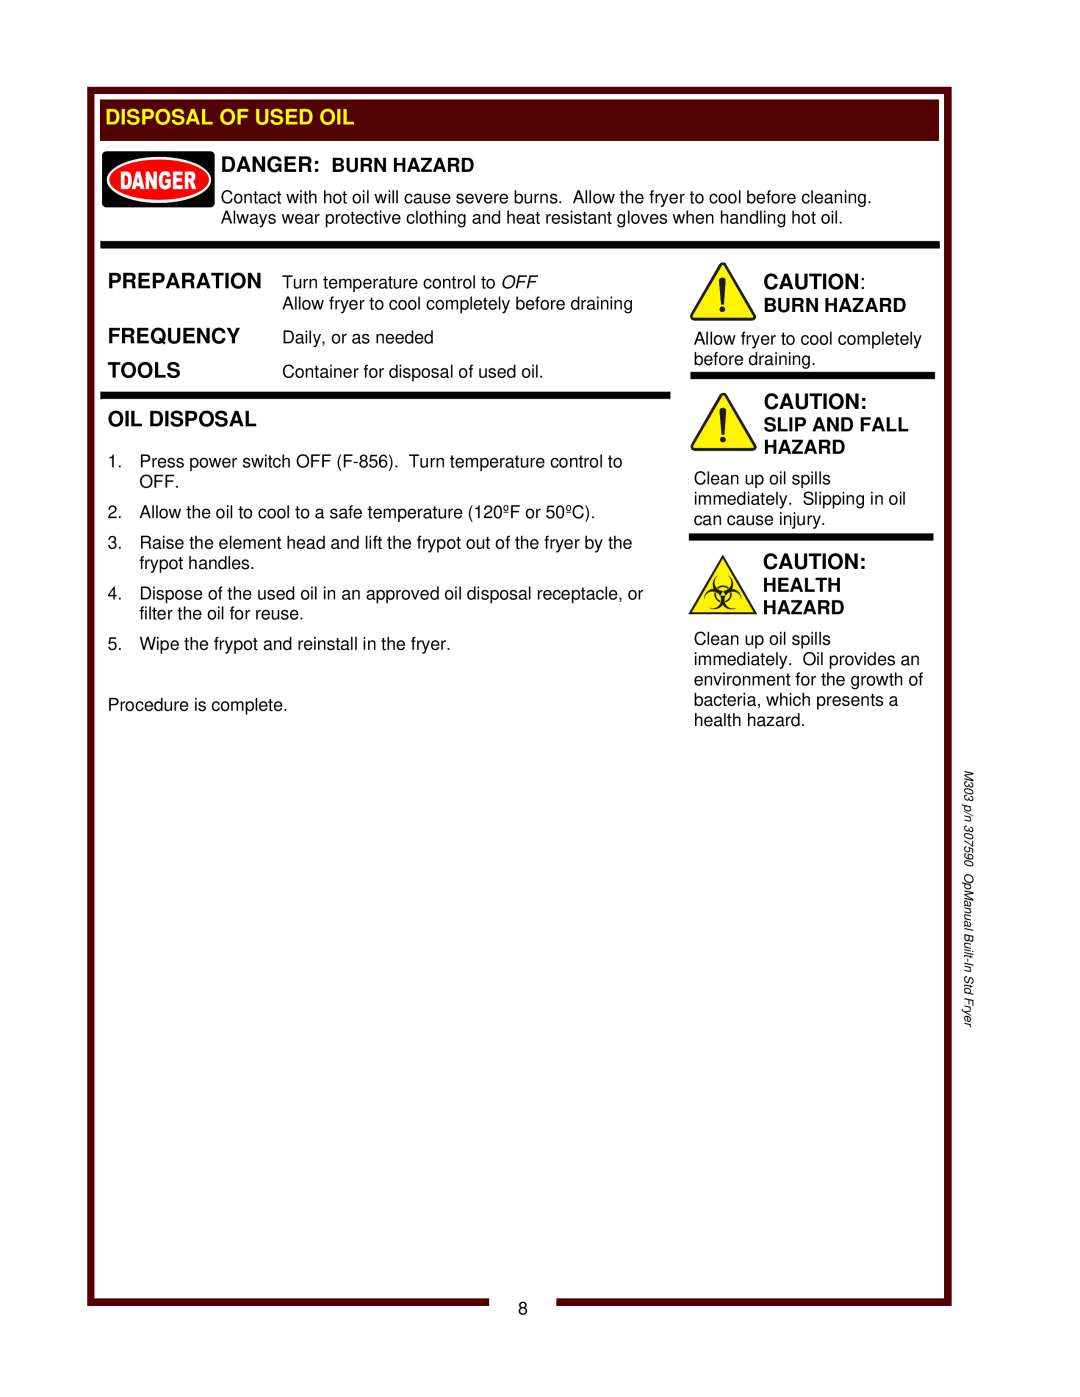 Wells F-556, F-676 Oil Disposal, Slip And Fall Hazard, Health Hazard, Preparation, Frequency, Tools, Danger Burn Hazard 